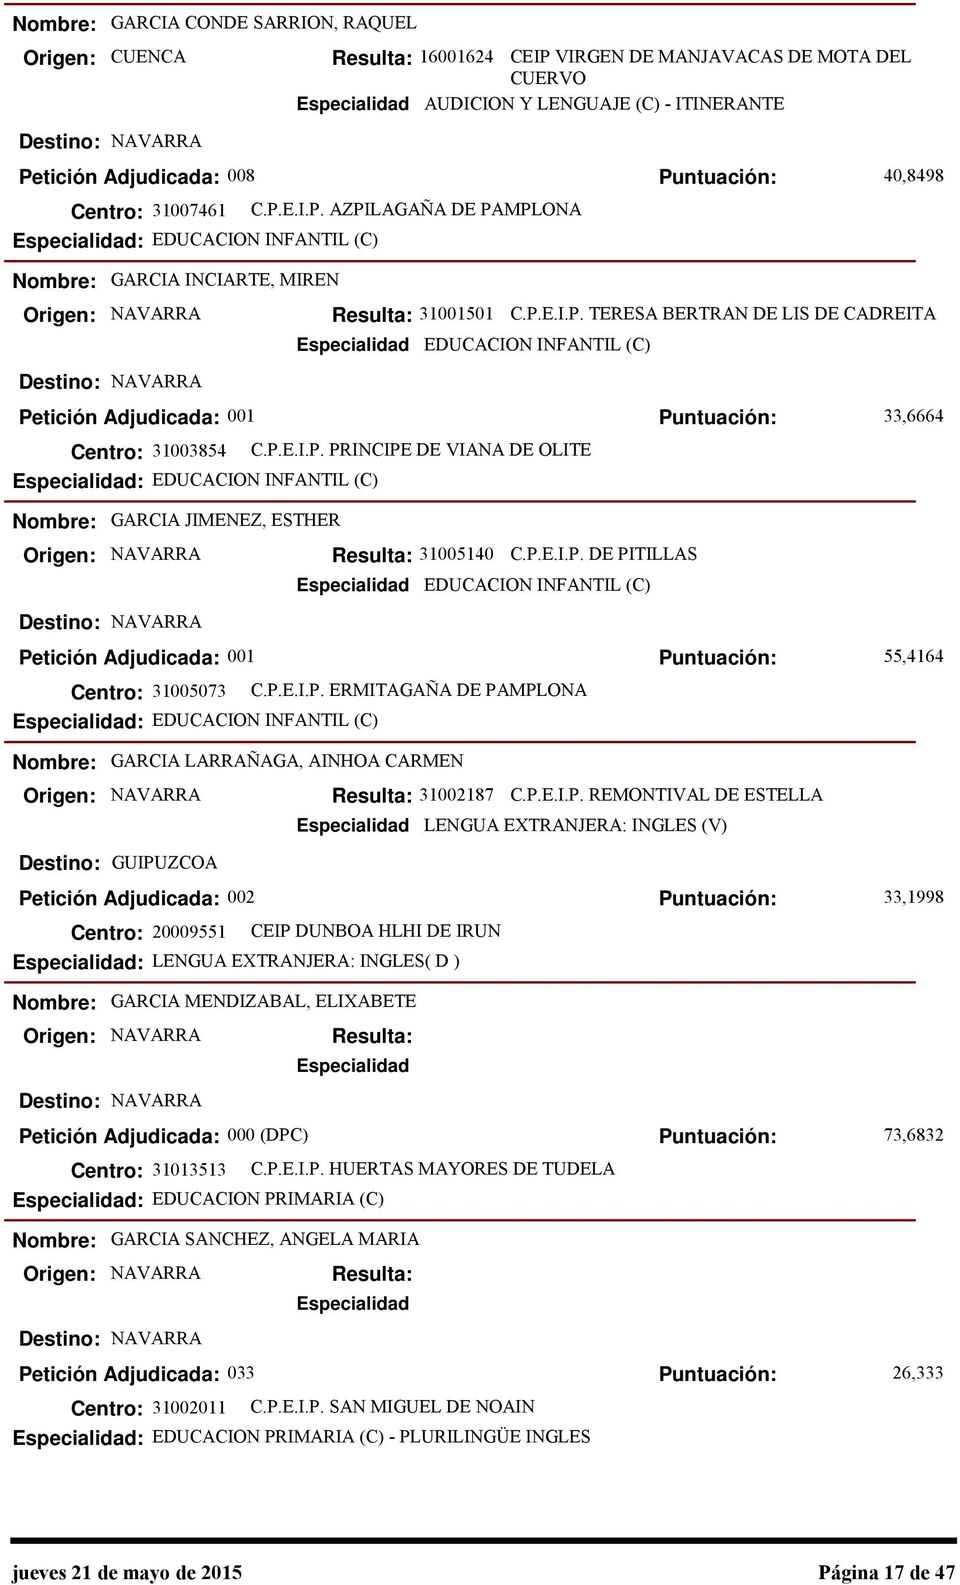 P.E.I.P. DE PITILLAS EDUCACION INFANTIL (C) C.P.E.I.P. REMONTIVAL DE ESTELLA LENGUA EXTRANJERA: INGLES (V) 55,4164 33,1998 GARCIA MENDIZABAL, ELIXABETE Petición Adjudicada: 000 (DPC) Centro: 31013513 C.